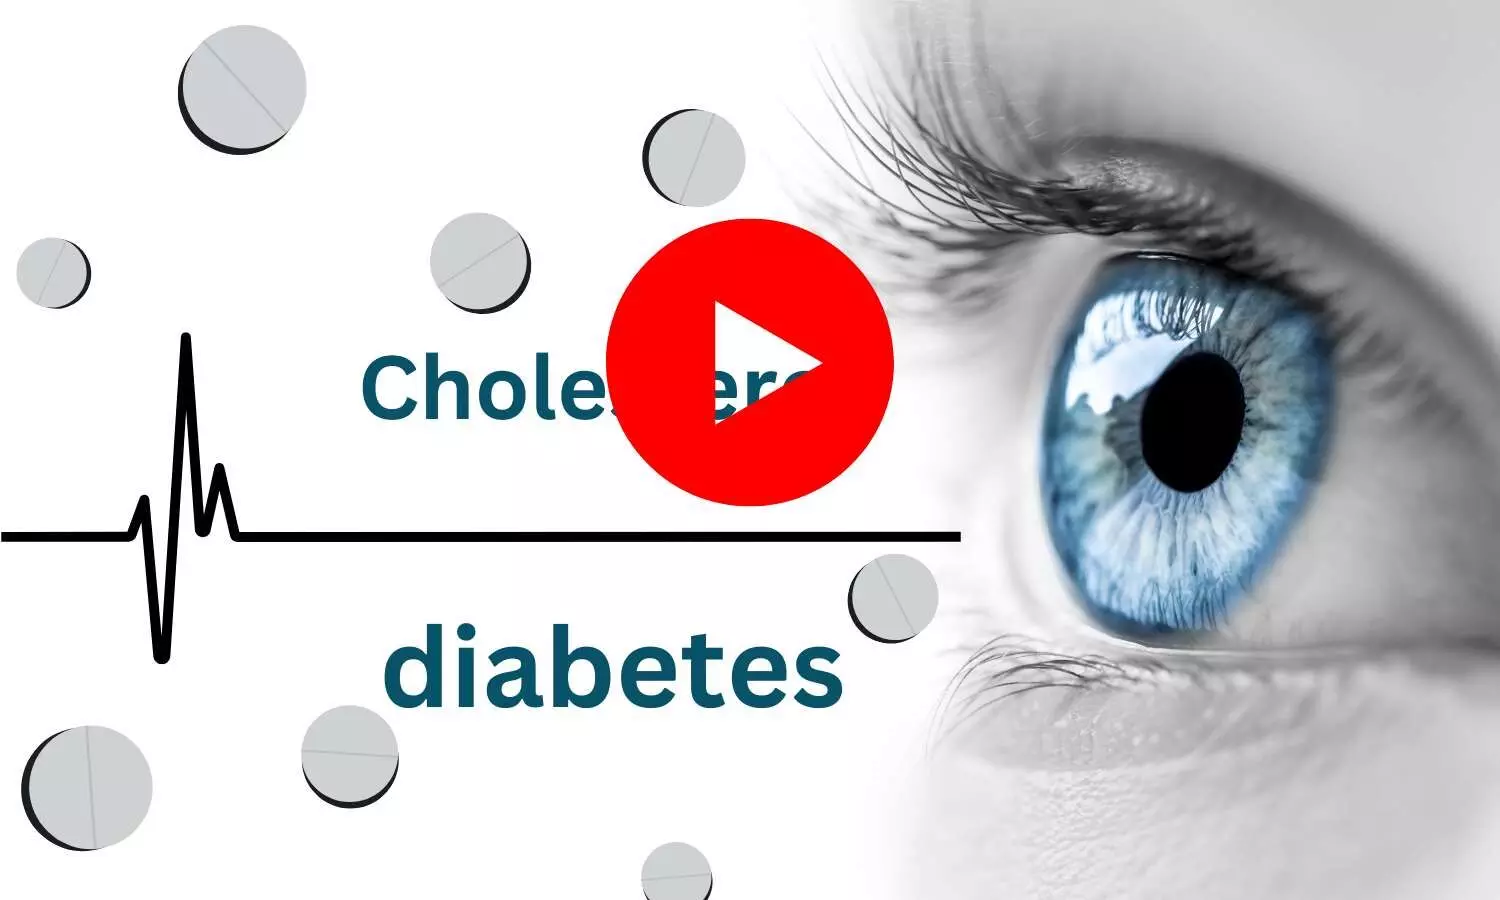 Cholesterol and diabetes drugs may lessen risk of degenerative eye disease of ageing